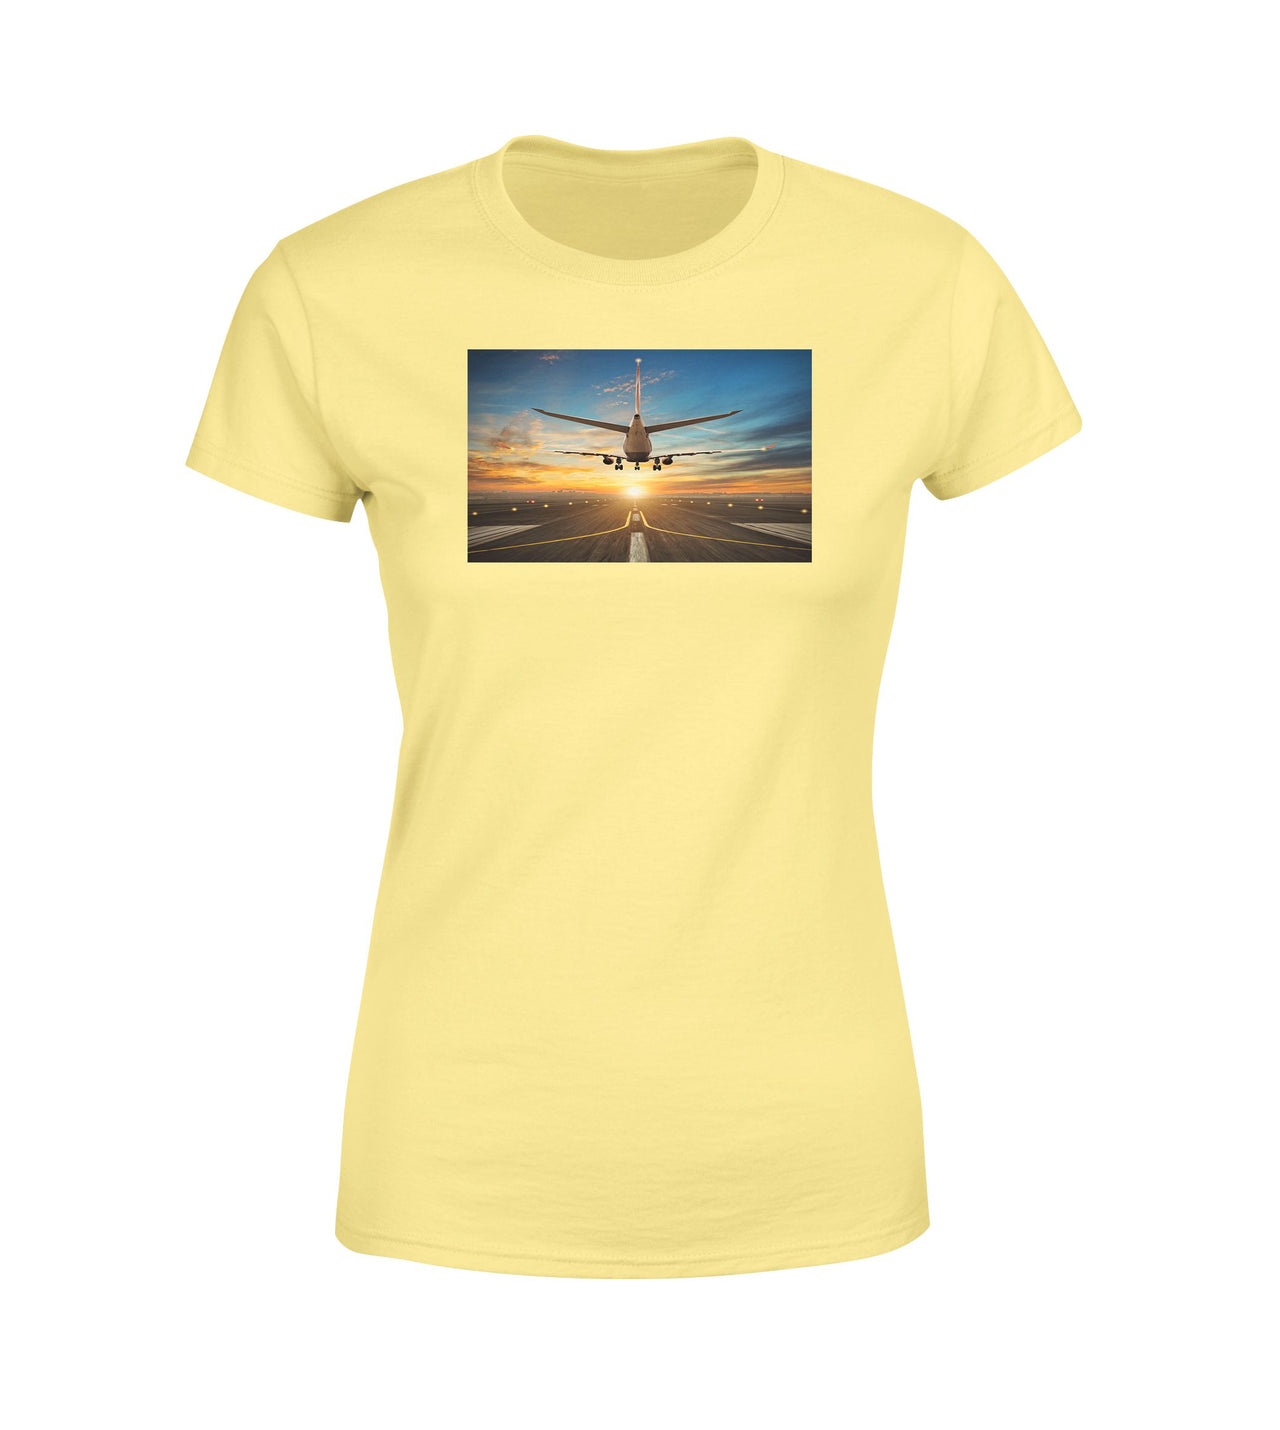 Airplane over Runway Towards the Sunrise Designed Women T-Shirts